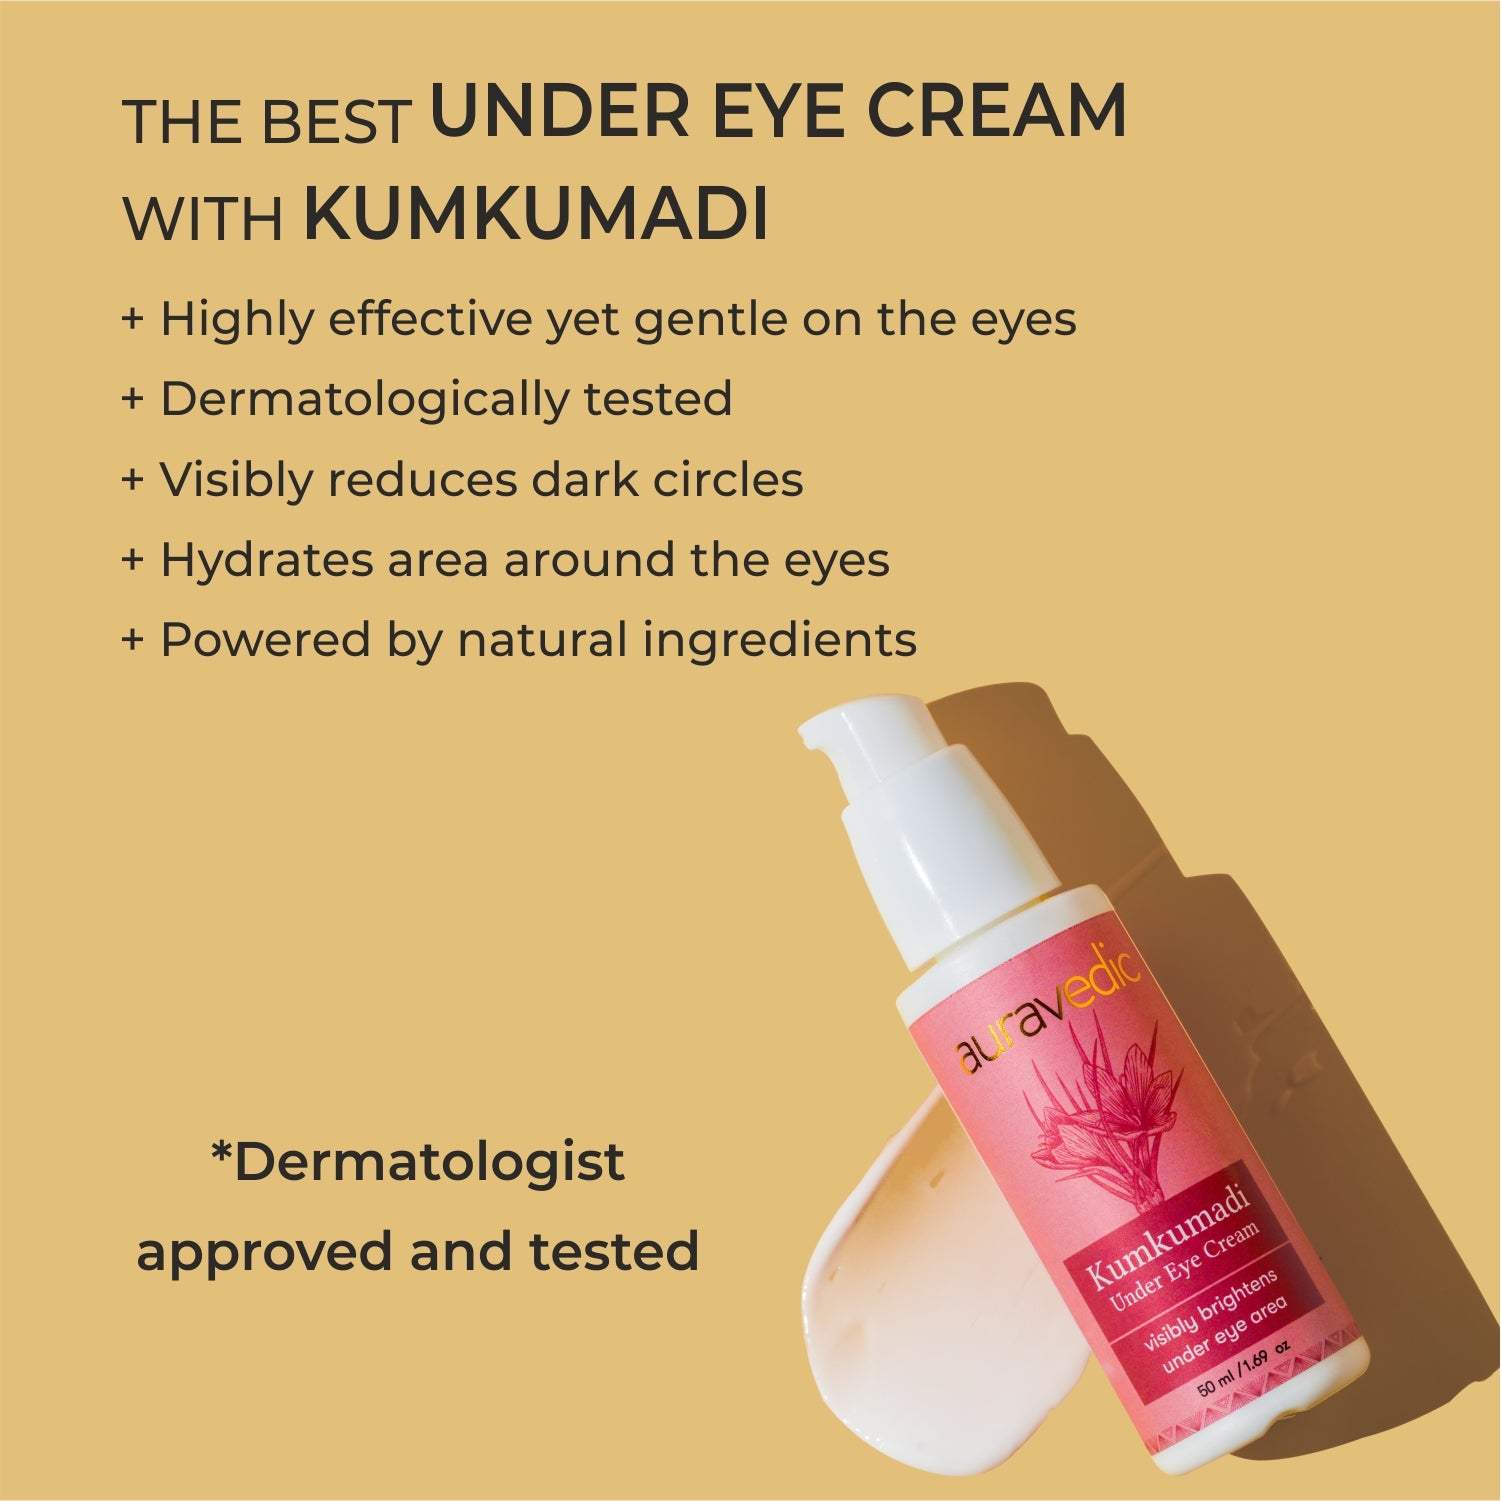 Kumkumadi Under Eye Cream